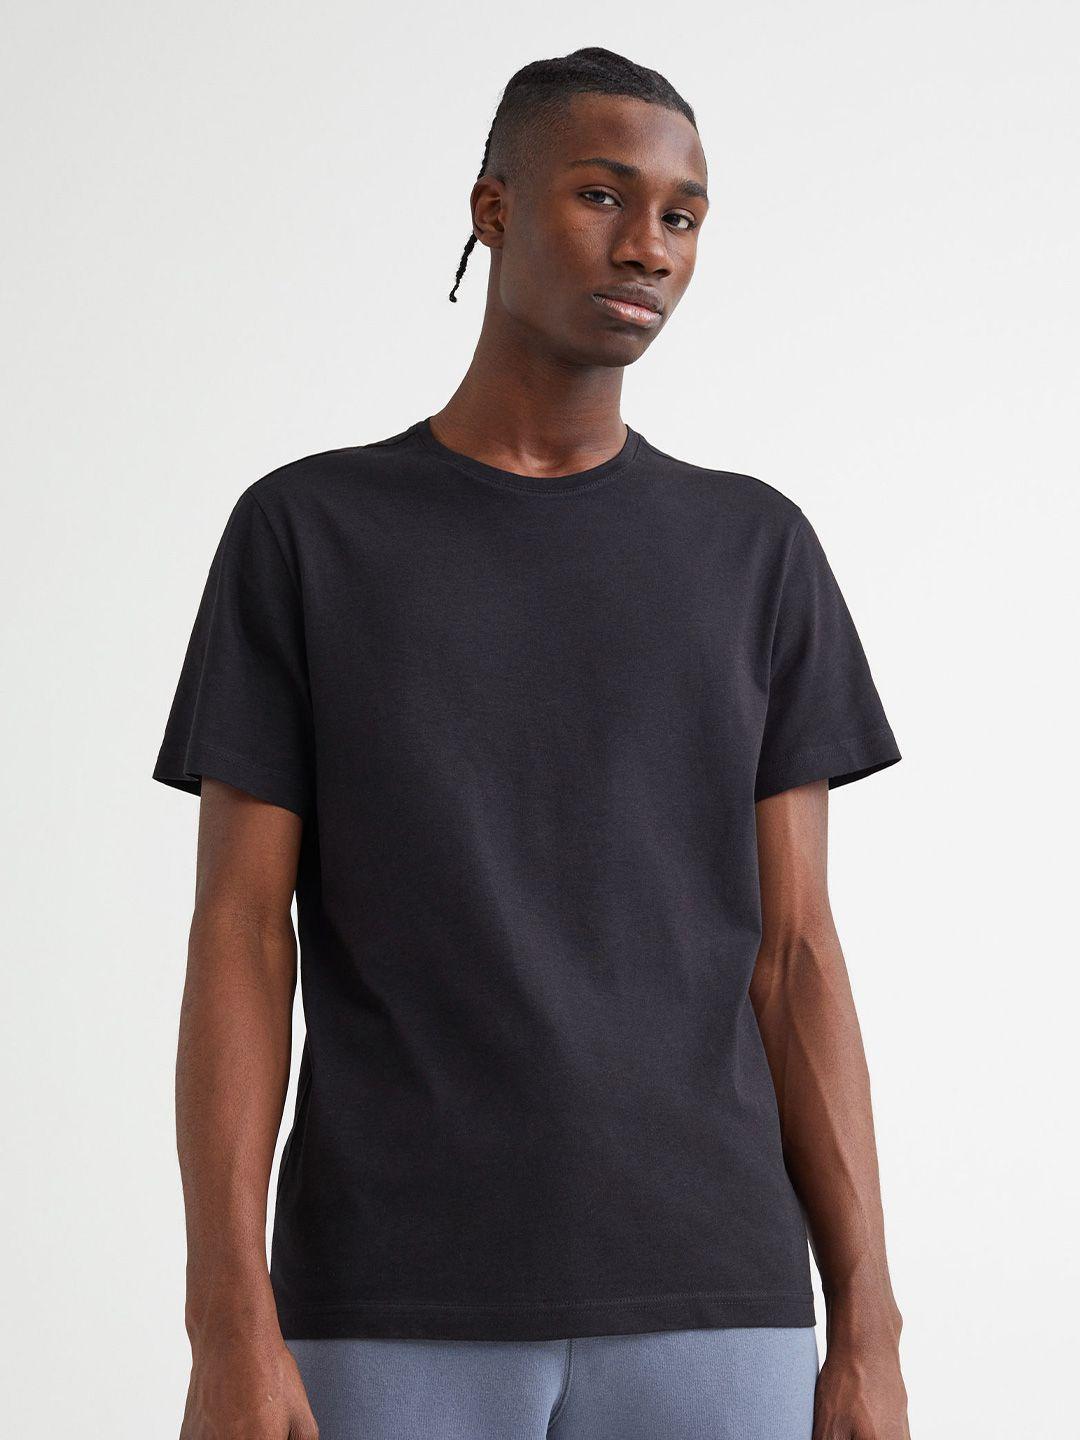 h&m men black regular fit t-shirt